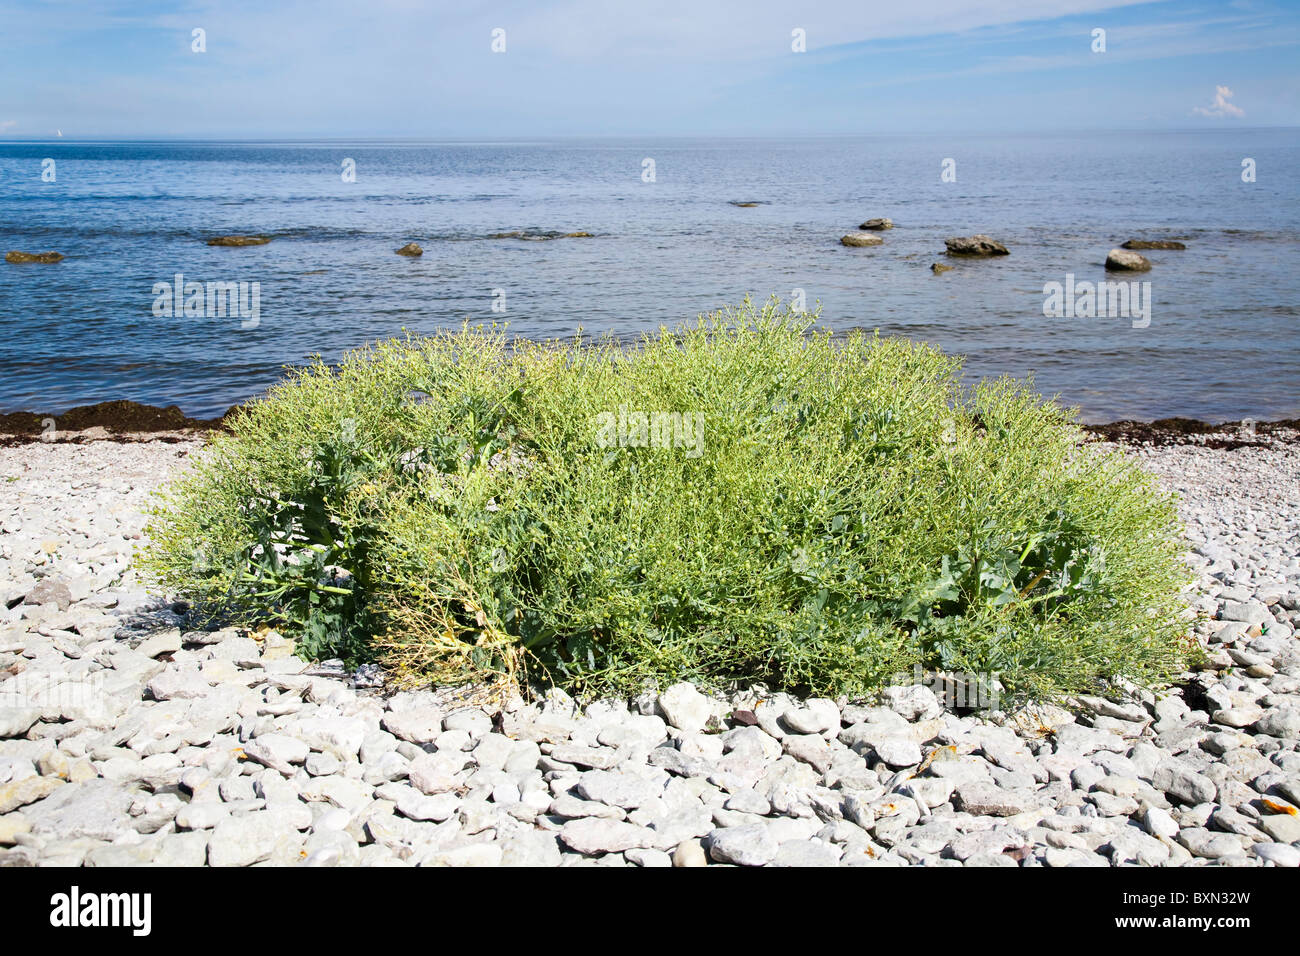 Crabbe maritima, sea kale, on the beach on Gotland, Sweden. Stock Photo